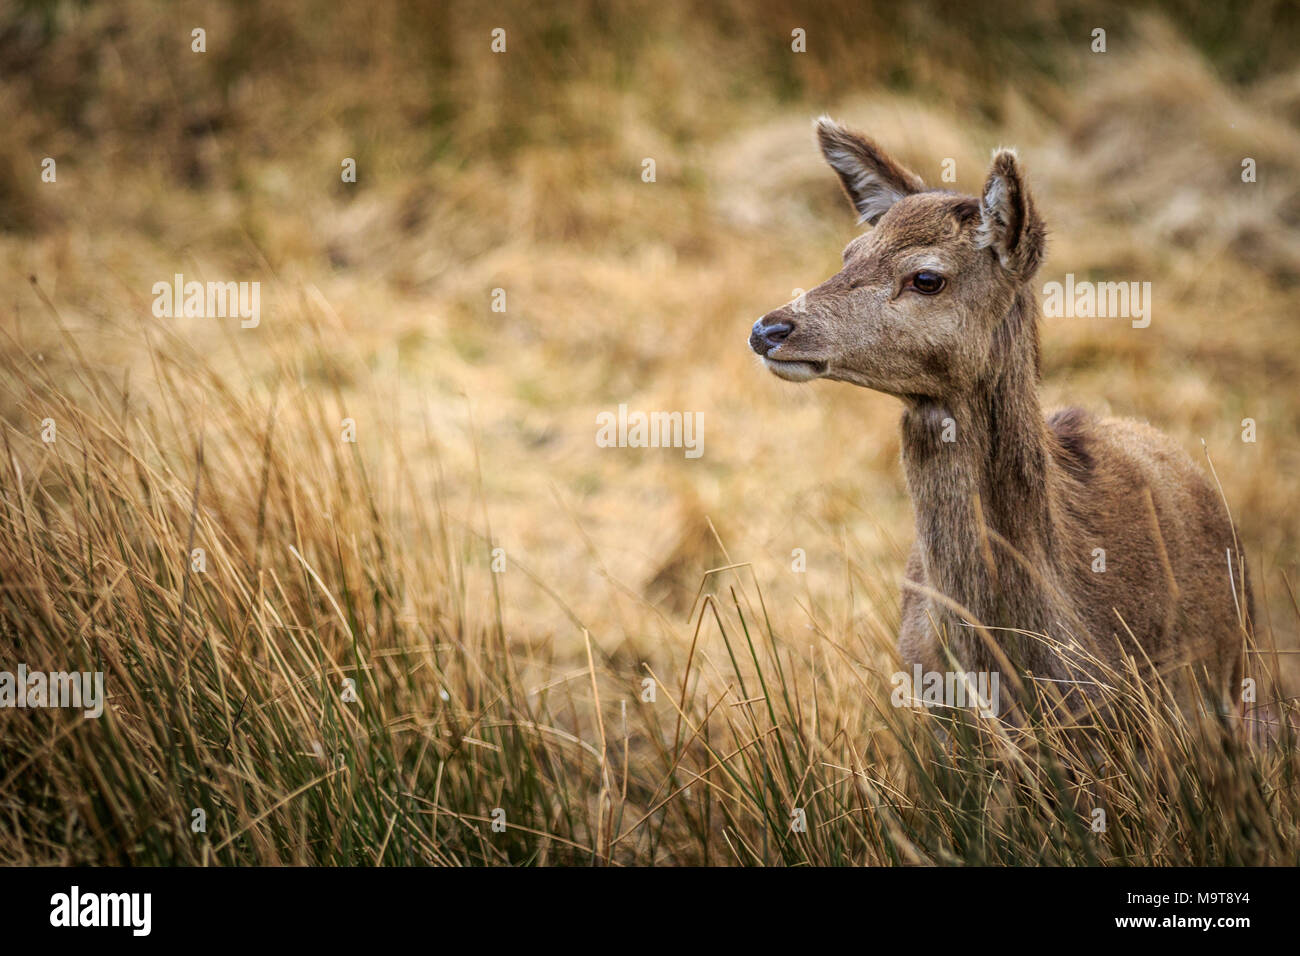 Red Deer looking alert in long grass. Stock Photo